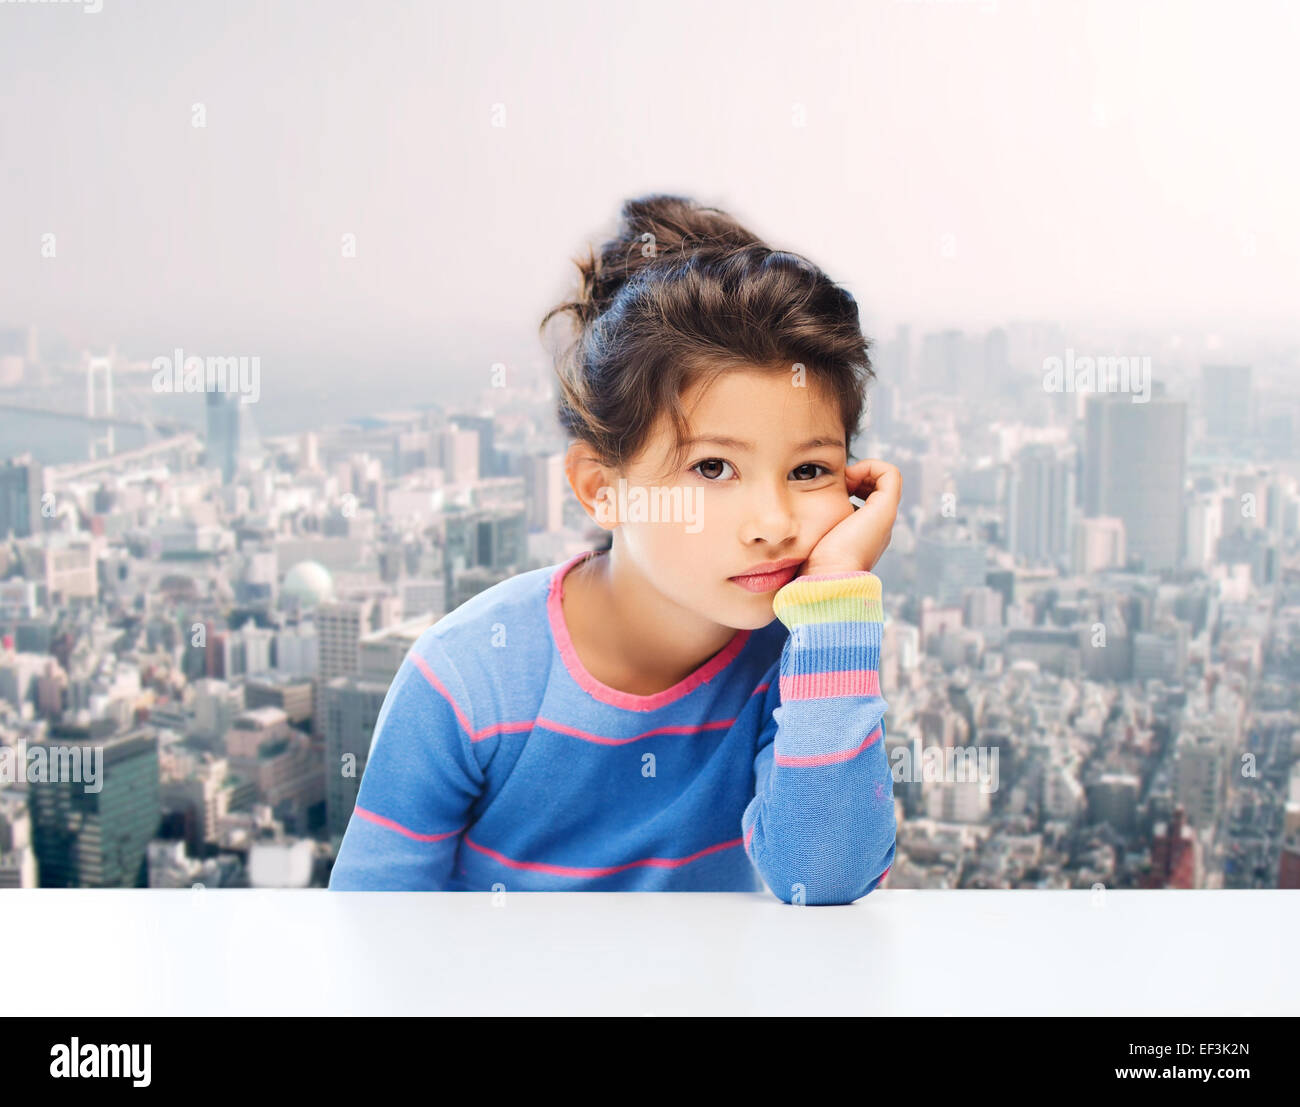 sad little girl over city background Stock Photo